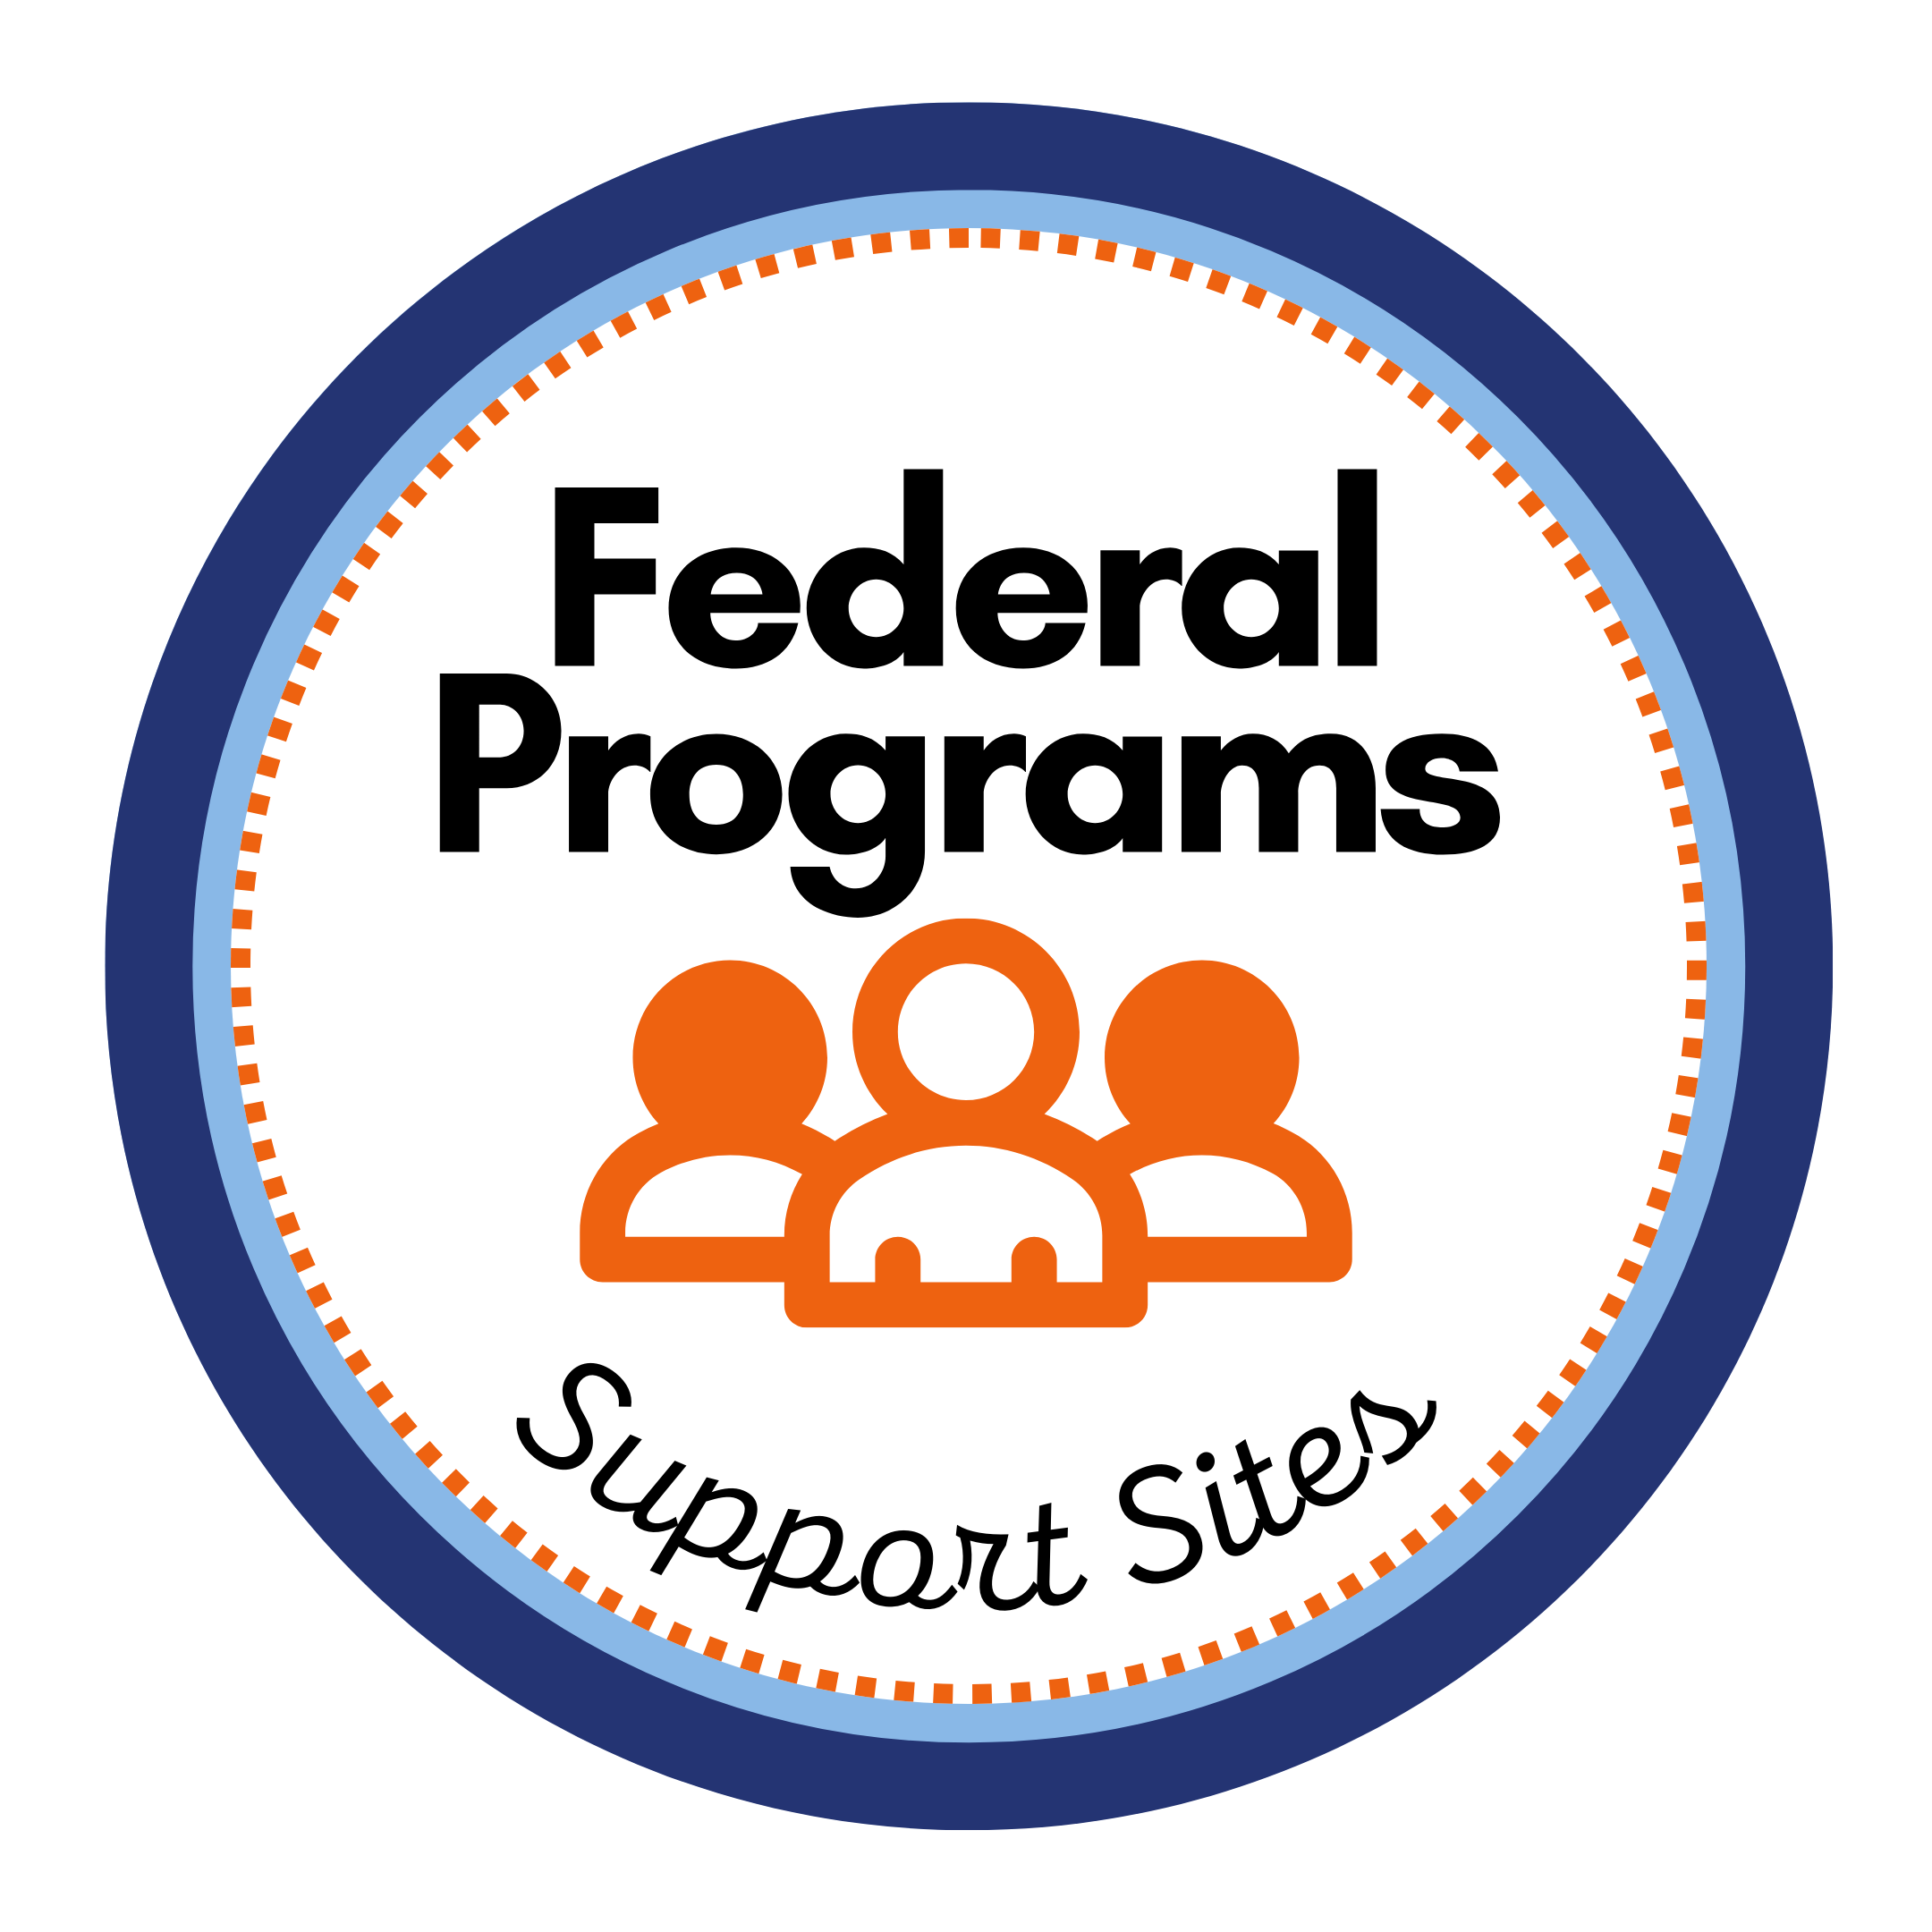 FederalPrograms